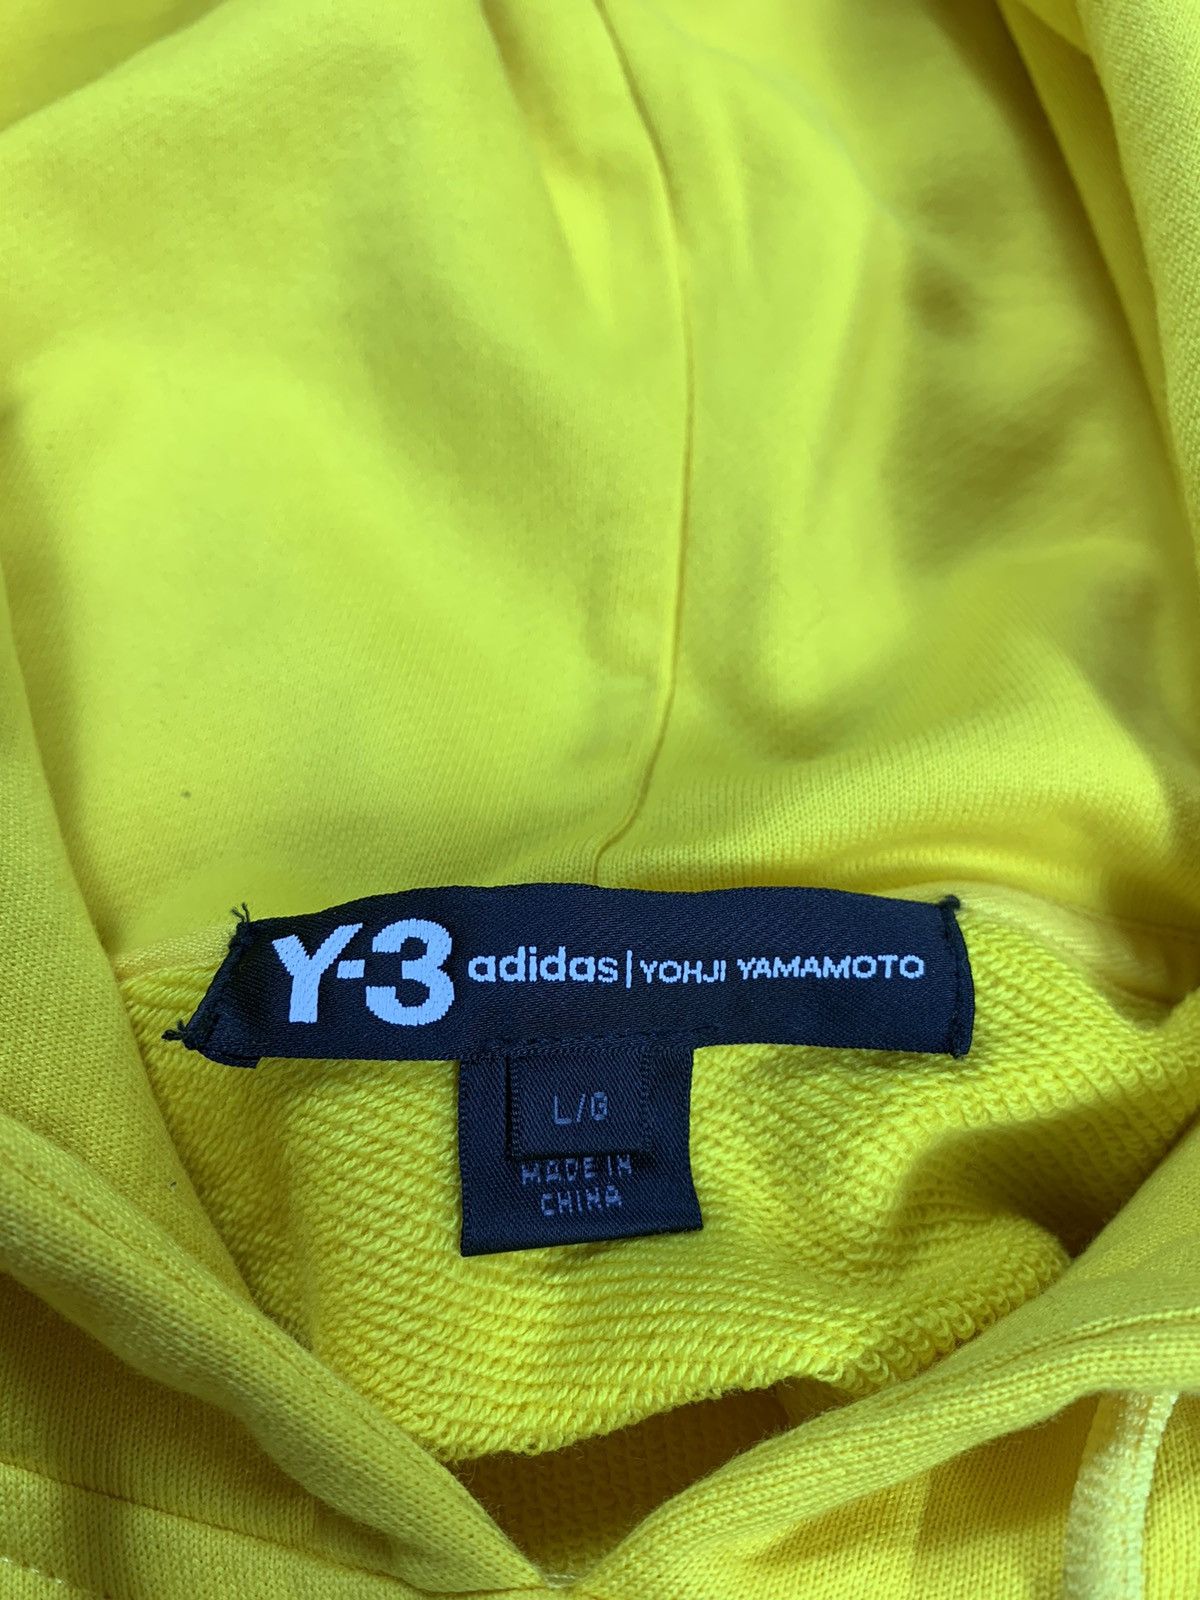 Adidas Adidas Y-3 Yoshi Yamamoto yellow hoodie Size US L / EU 52-54 / 3 - 3 Thumbnail